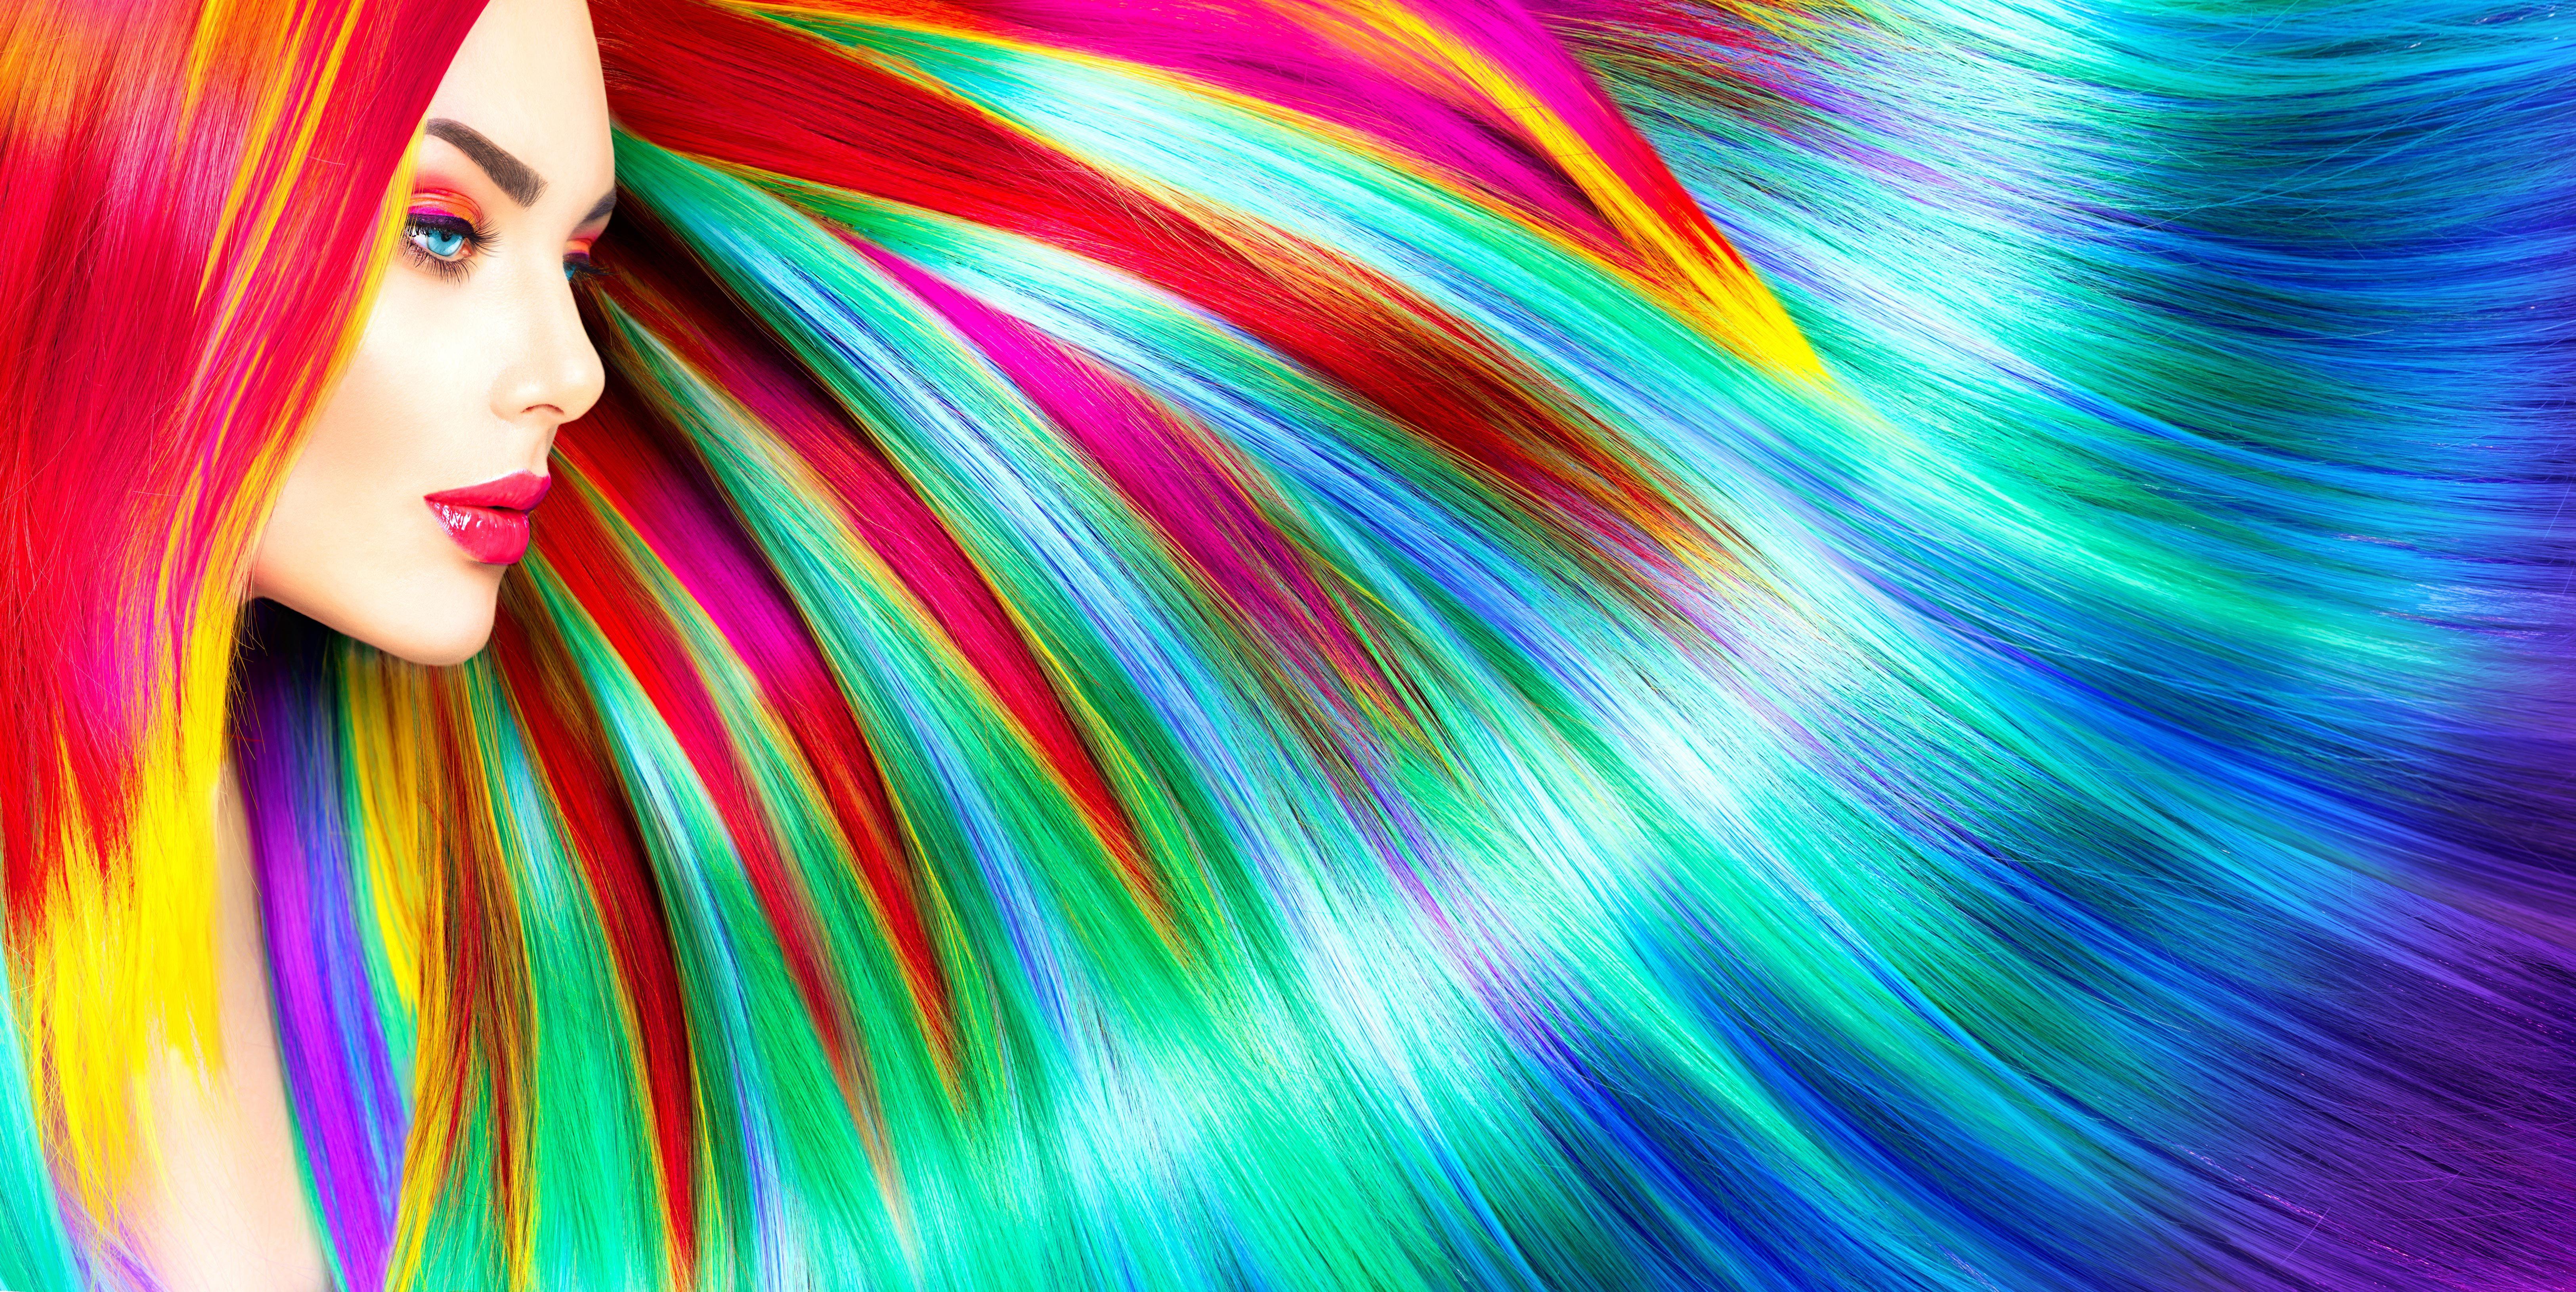 Rainbow Colorful Girl Hairs 5k, HD Abstract, 4k Wallpaper, Image